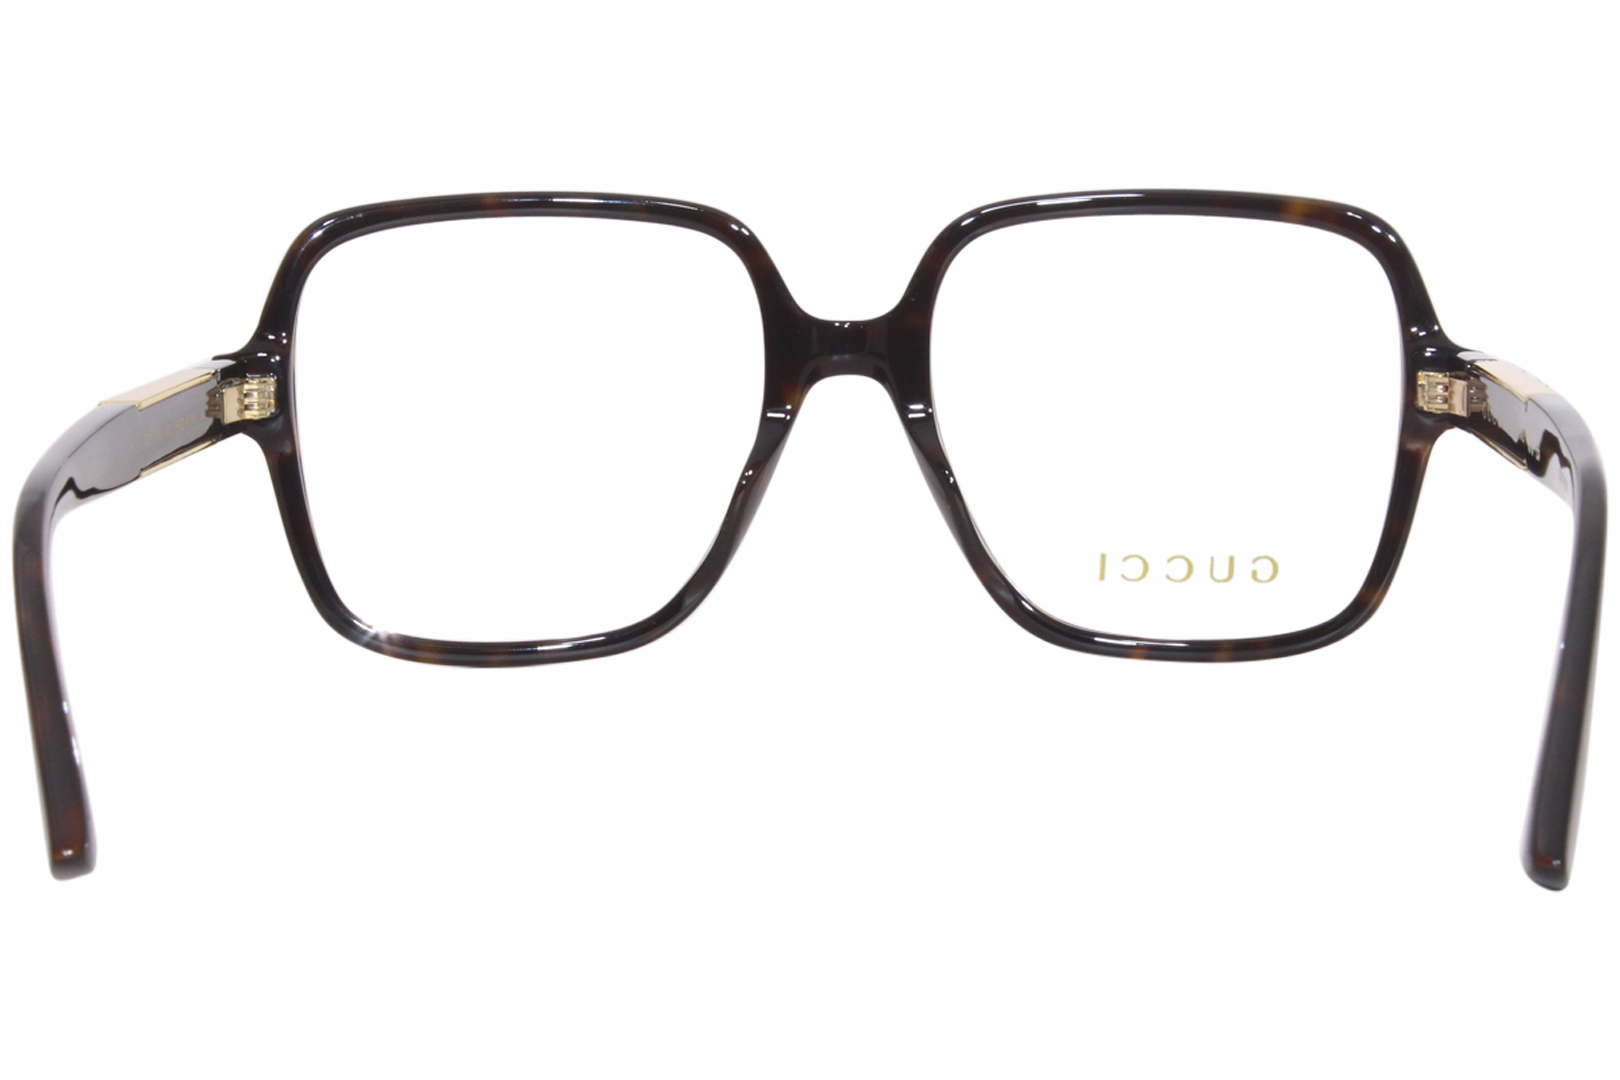 Gucci Black Eyeglasses GG1193O 001 56